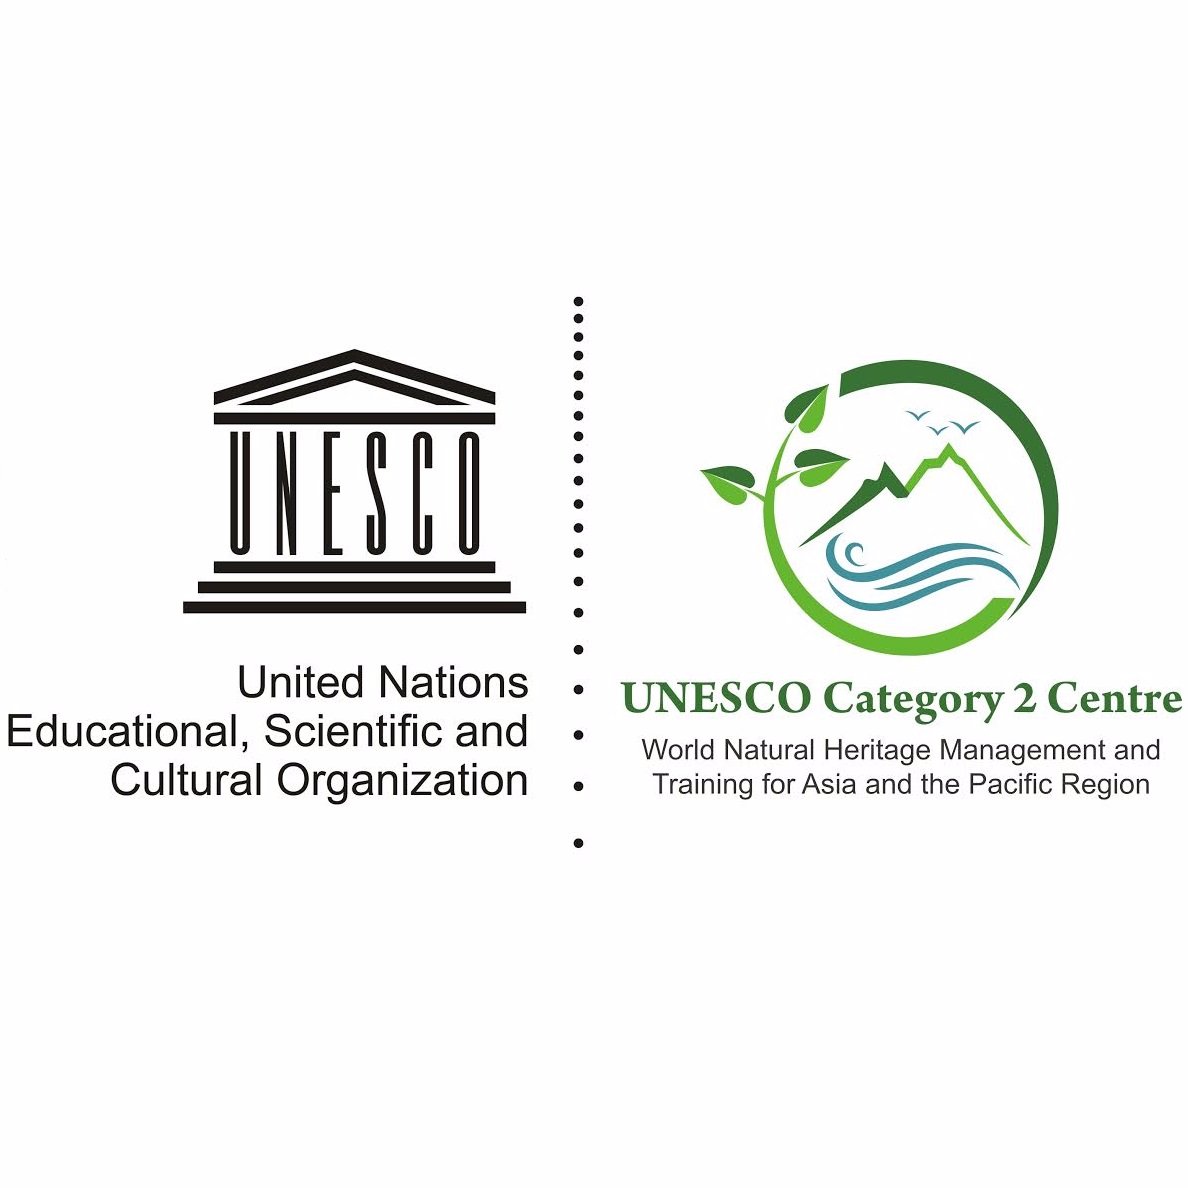 UNESCO-C2C, WII